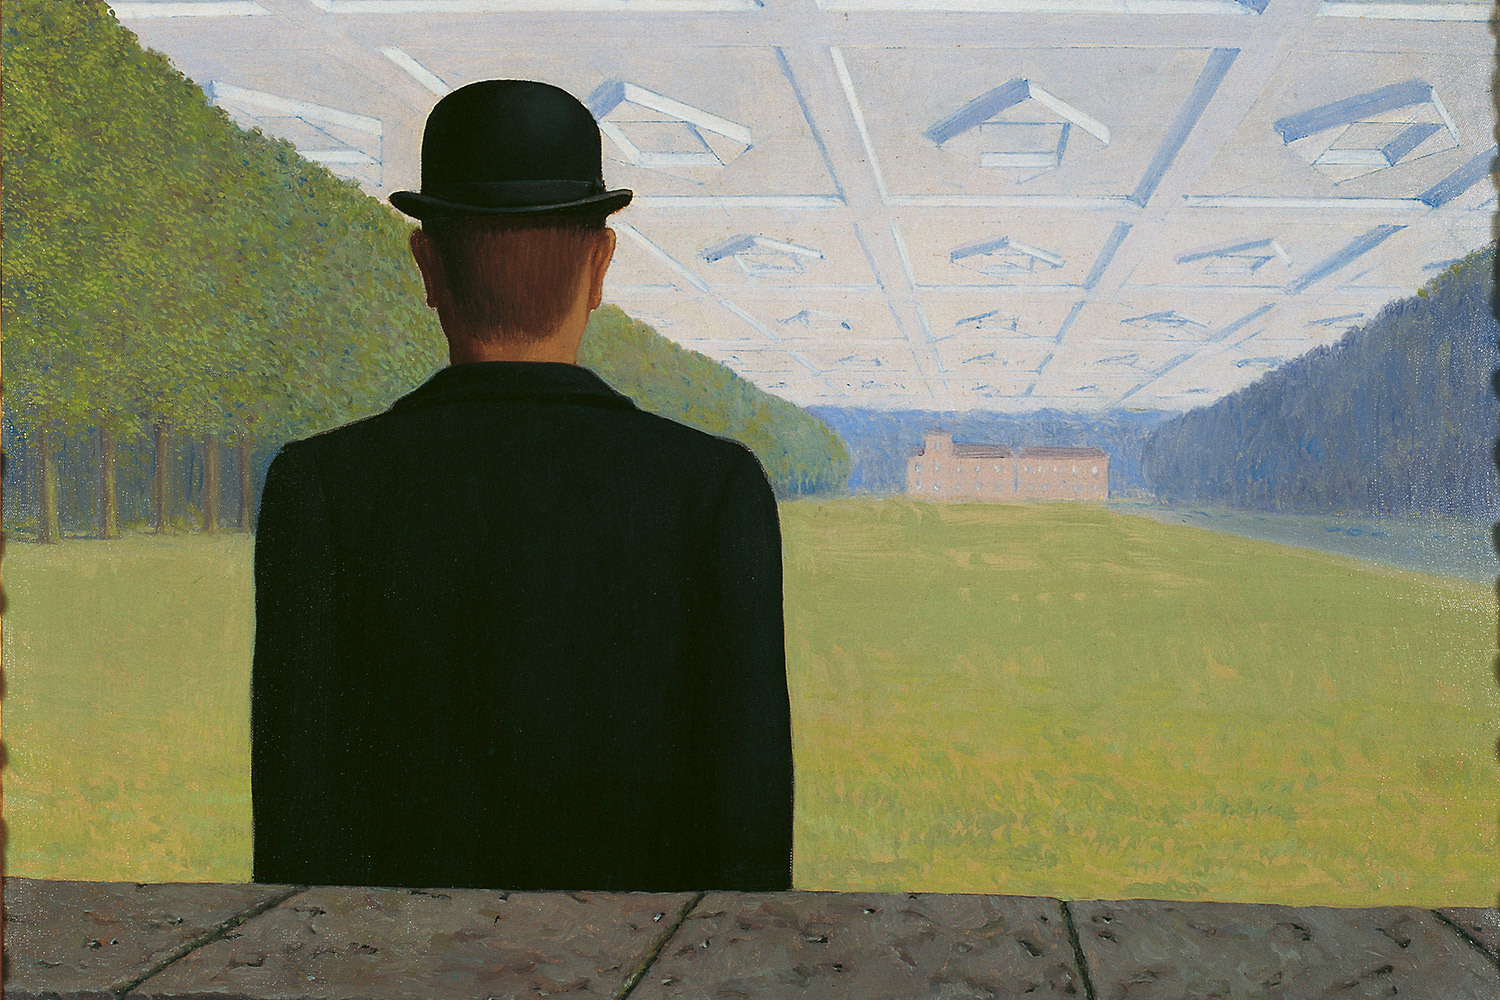 Cuadro surrealista de Magritte